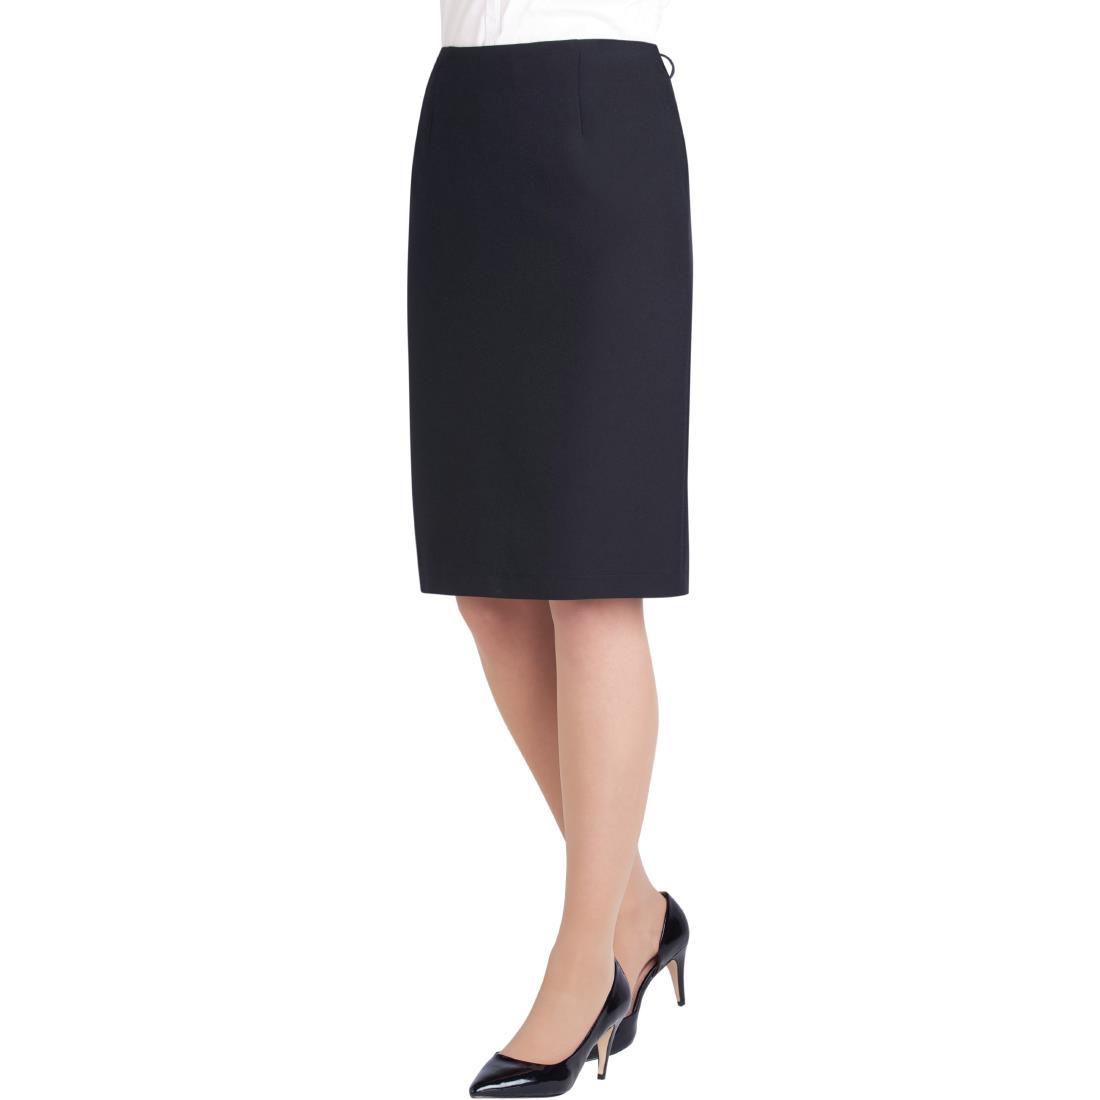 Events Ladies Black Skirt Size 24 - BB174-24  - 1